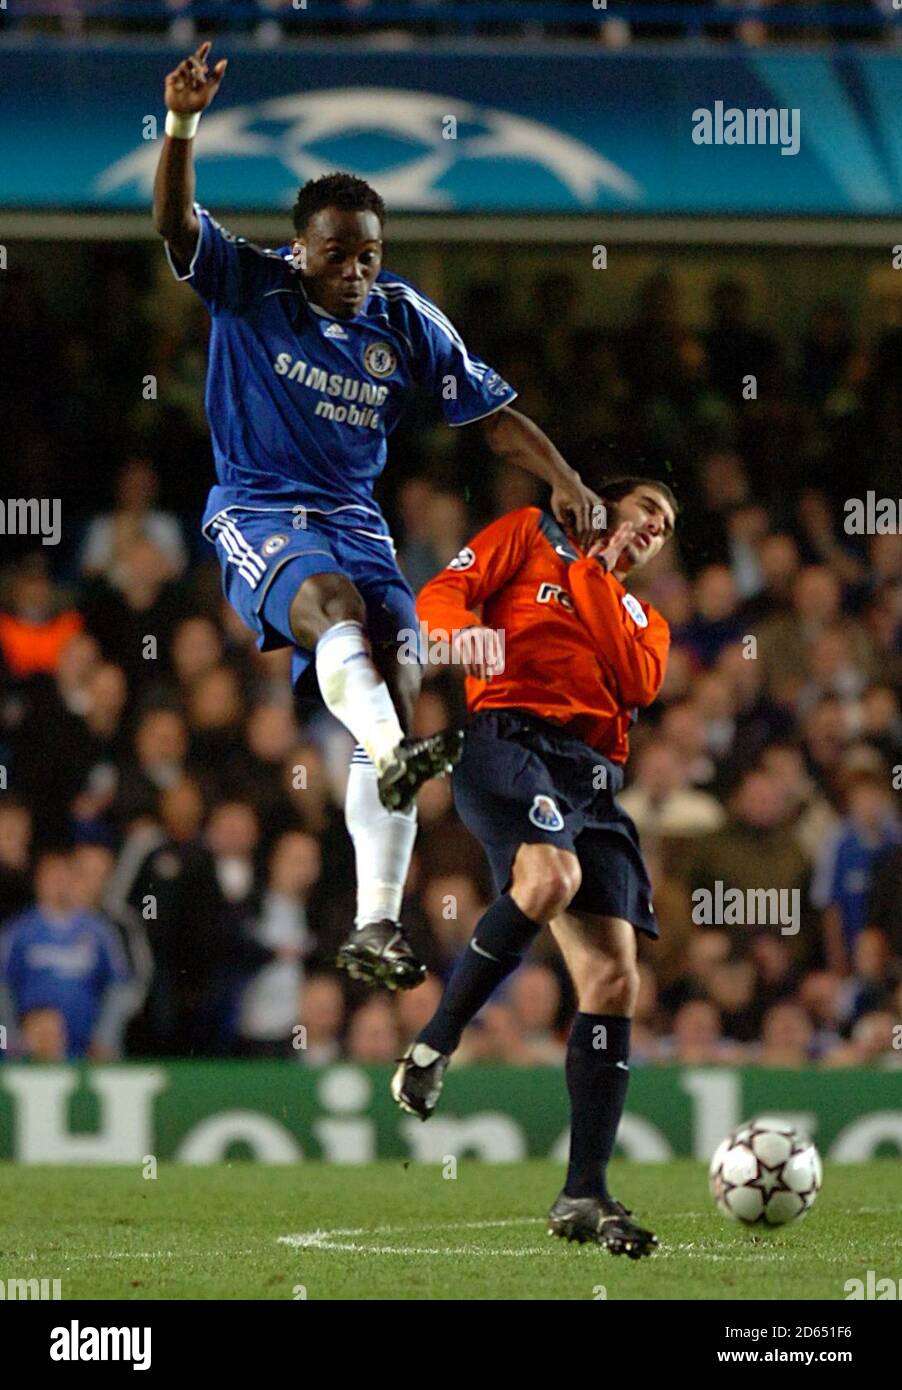 Chelsea's Michael Essien (left) battles for the ball with FC Porto's Lisandro Lopez. Stock Photo